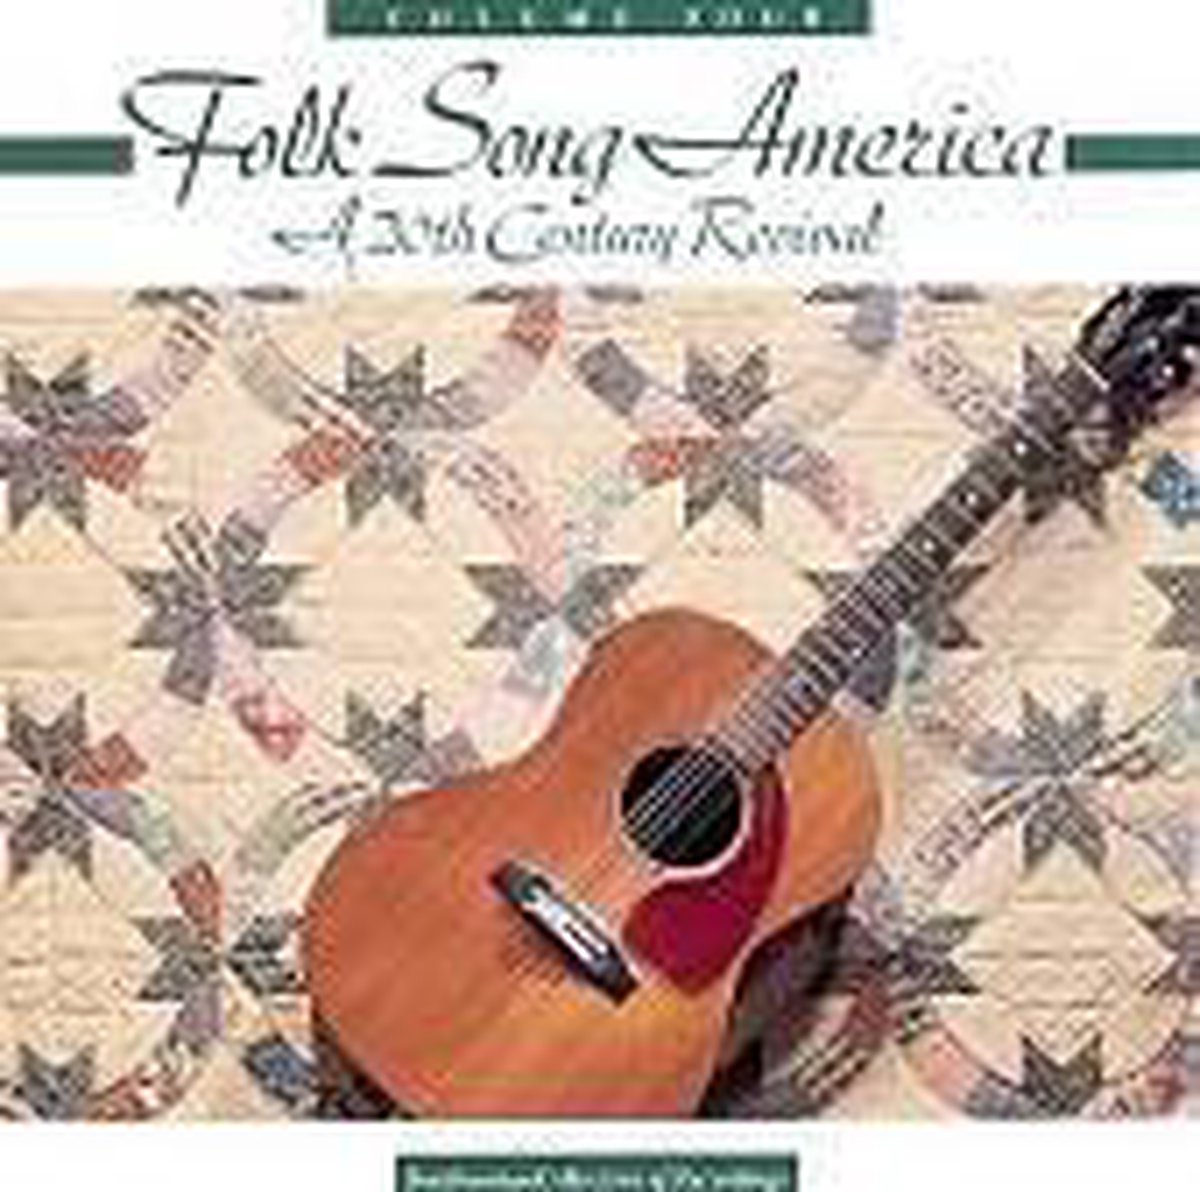 Folk Song America, Vol. 4 - various artists